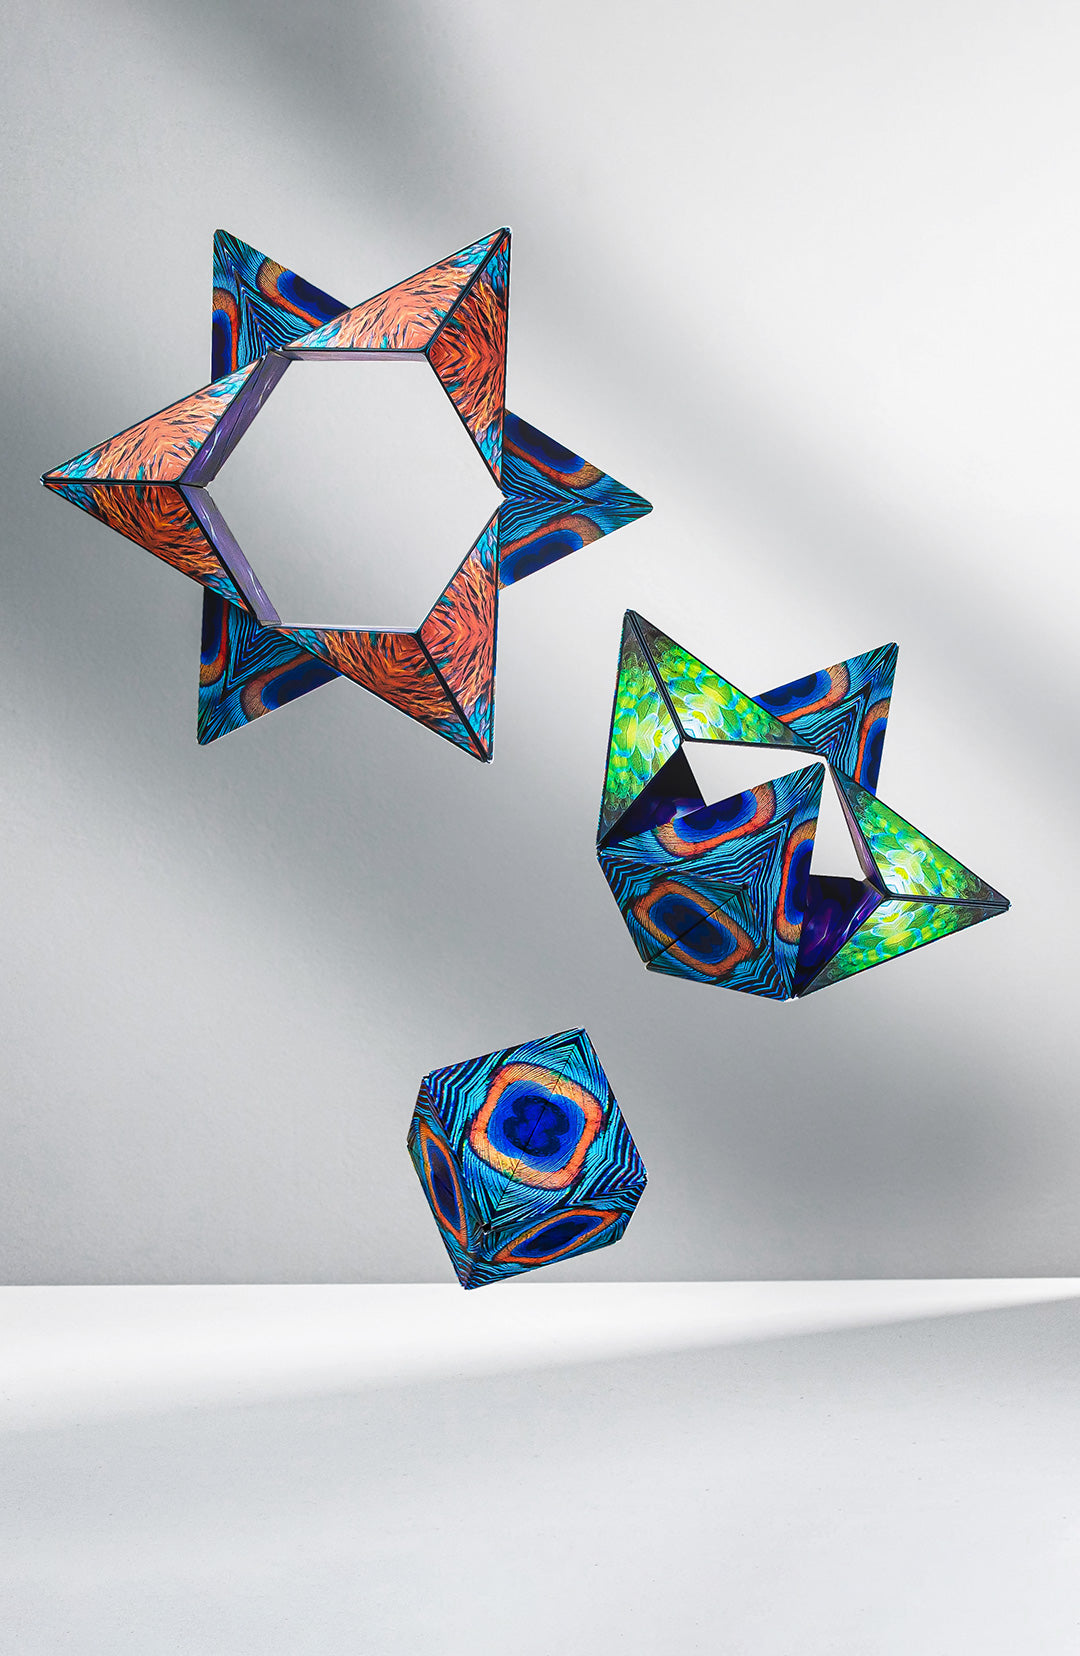 Shashibo Cube - Shape-shifting sculpture toy. - Art of Play